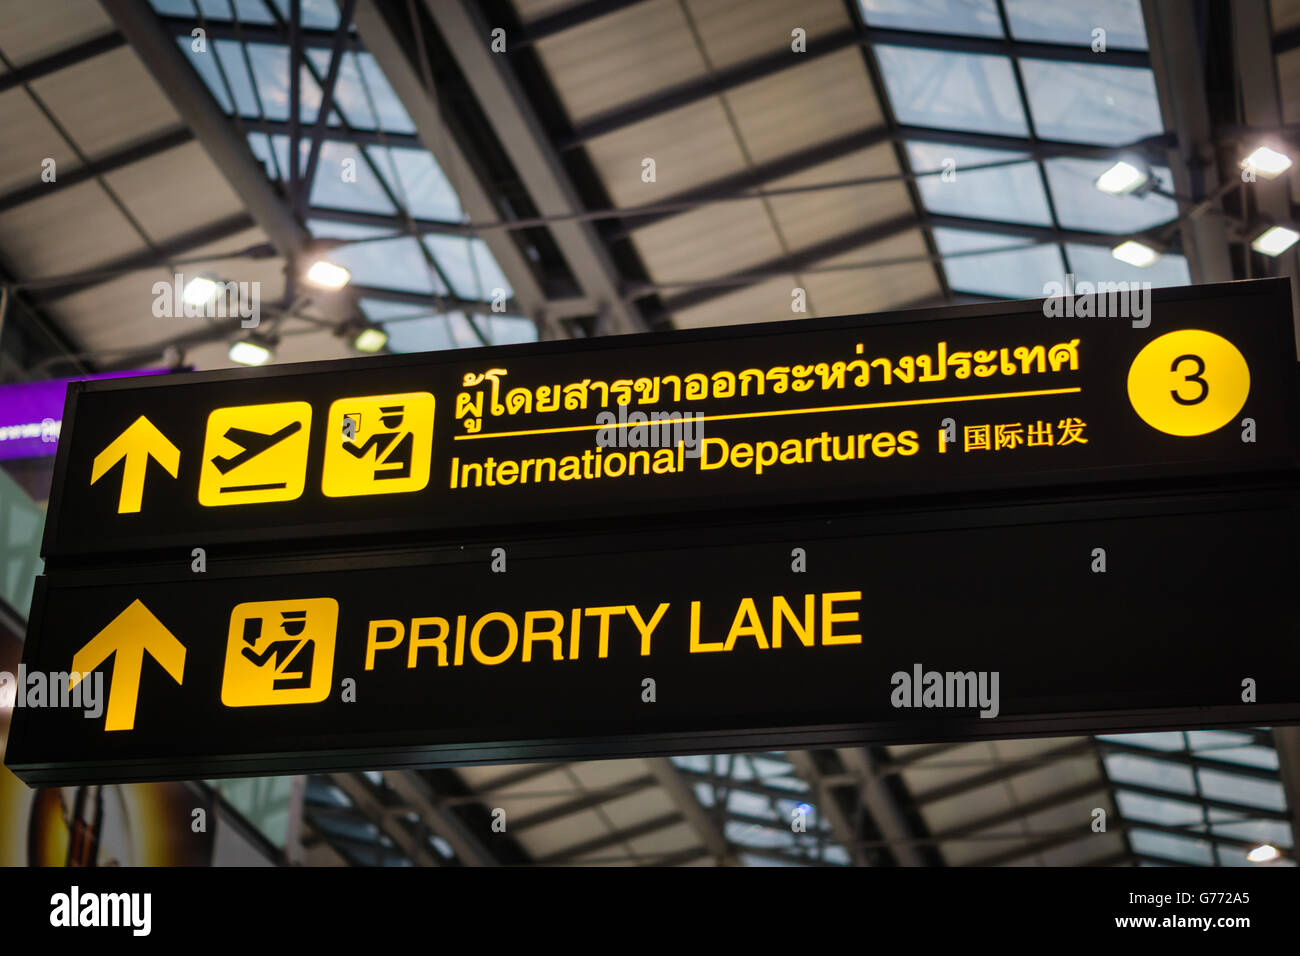 Priority Lane - illuminated yellow sign at airport Stock Photo